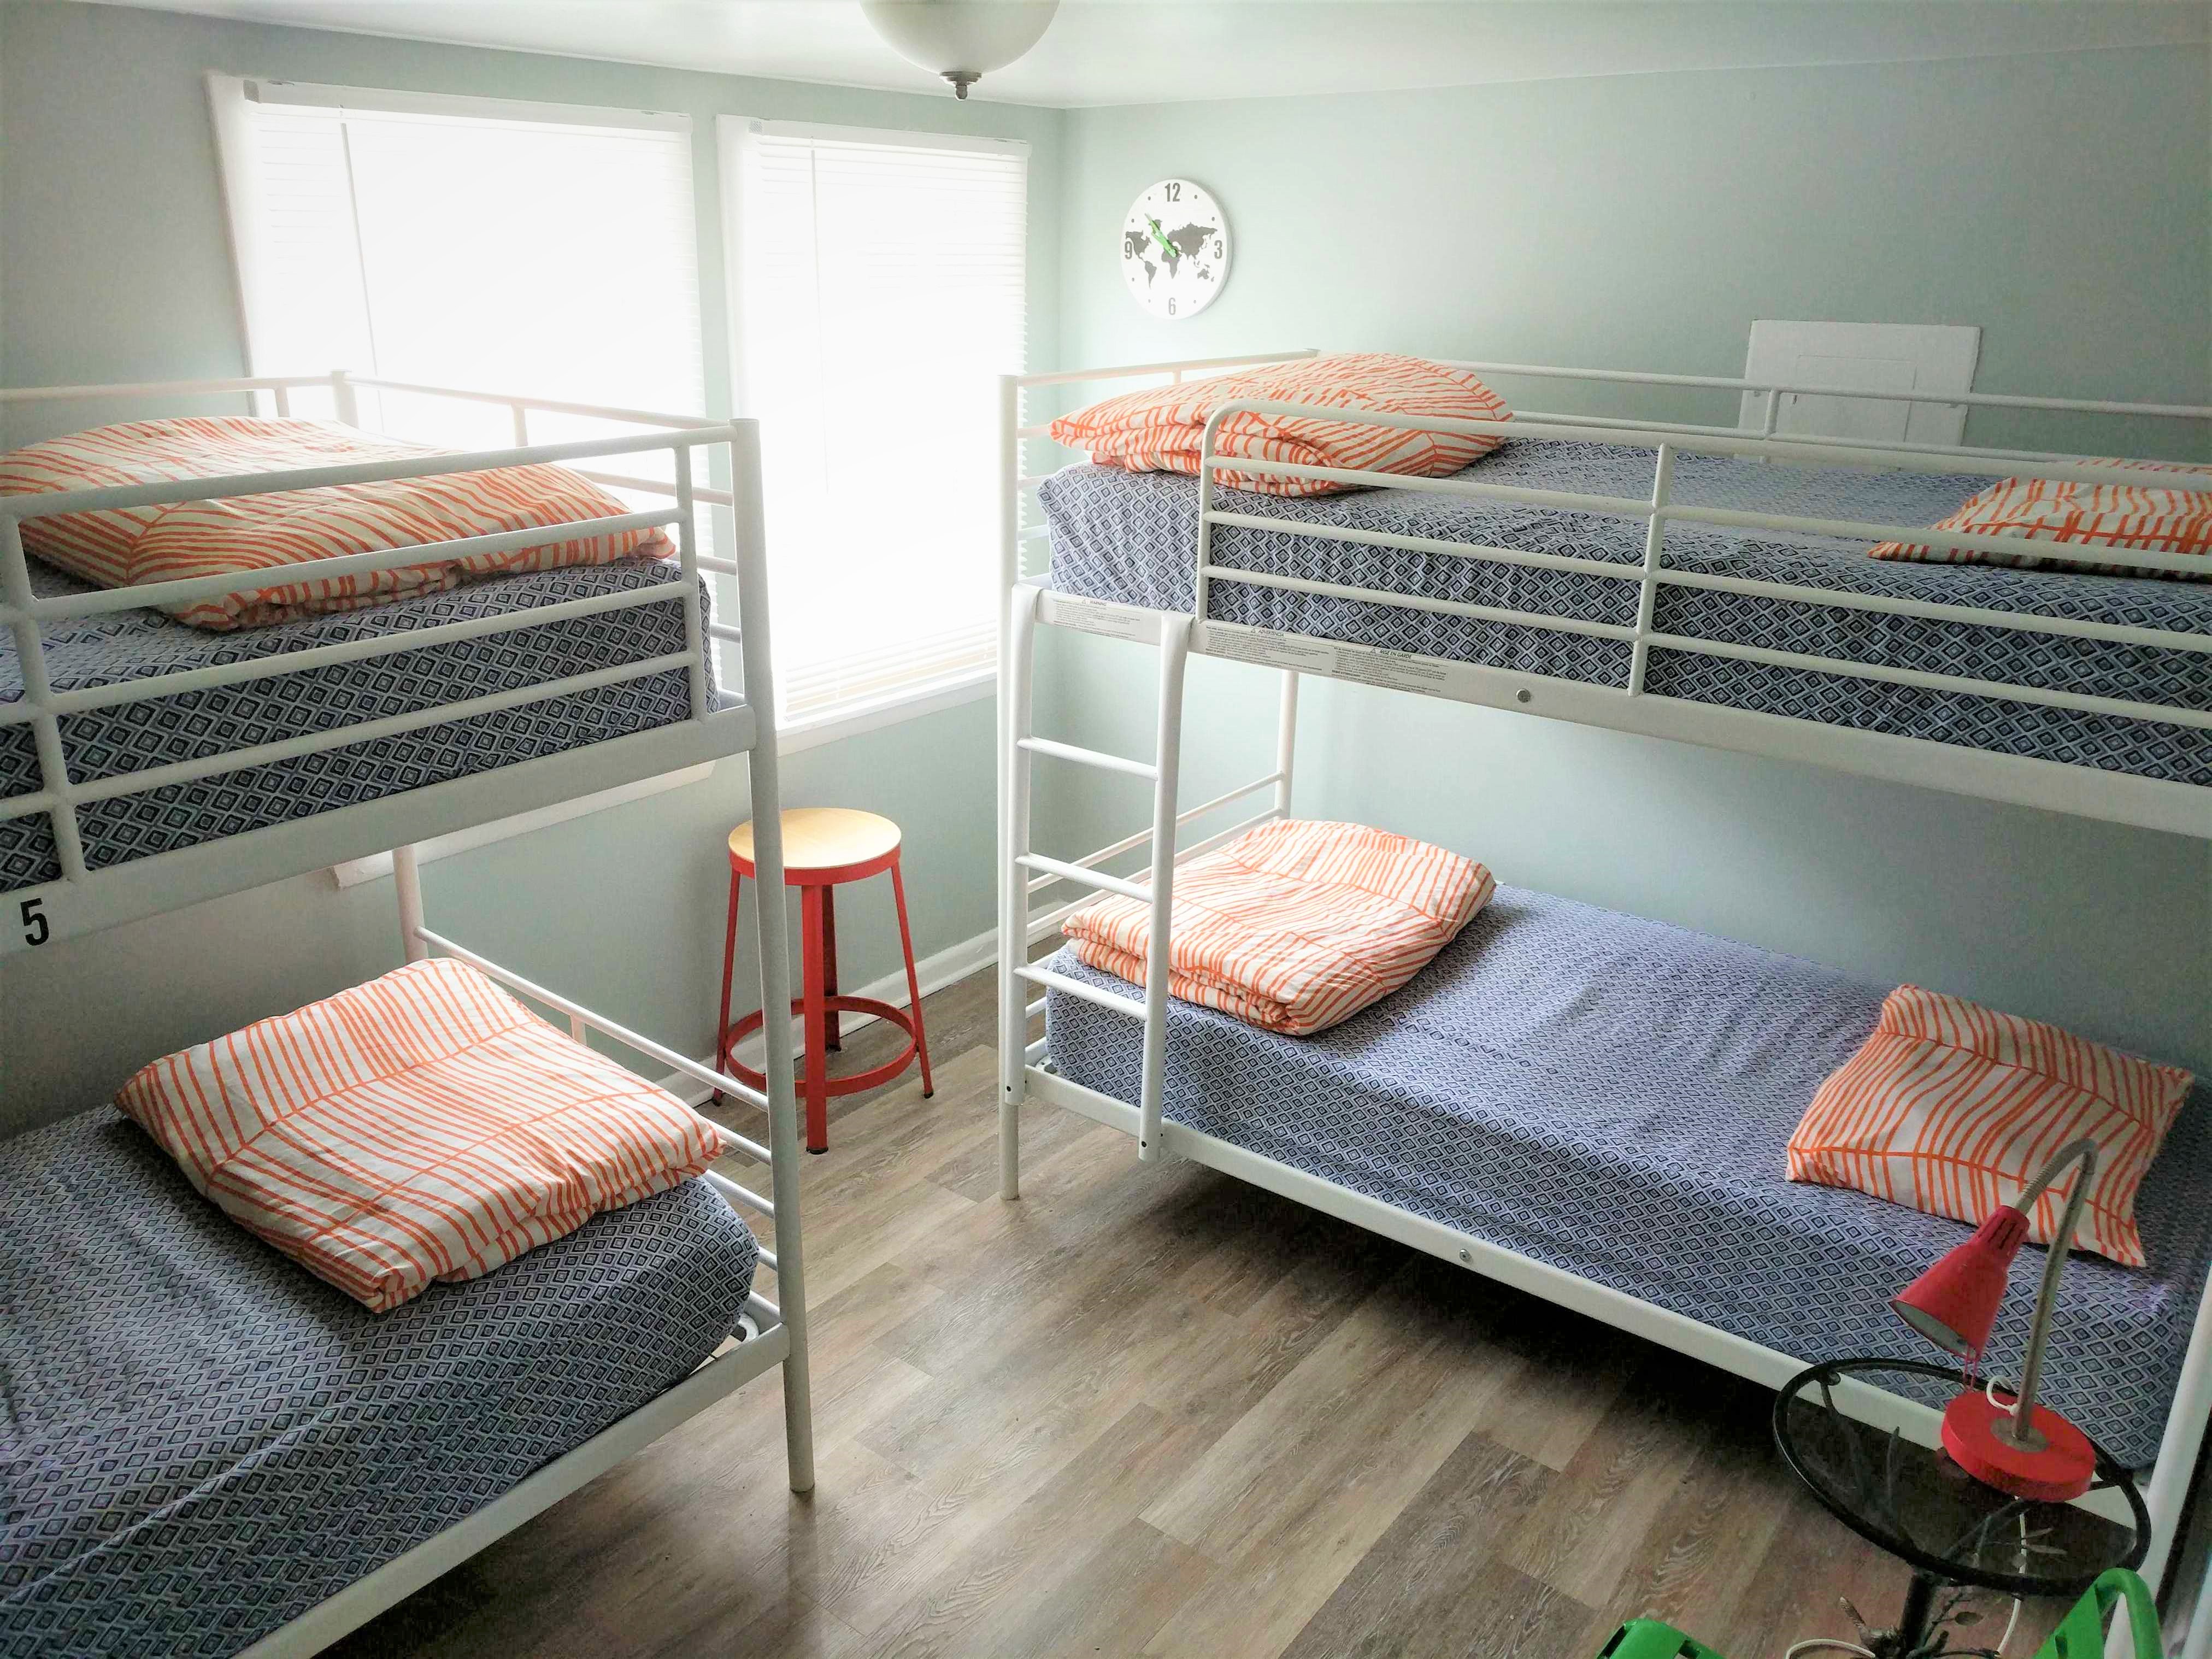 6 bed mixed dorm room in Atlantic City